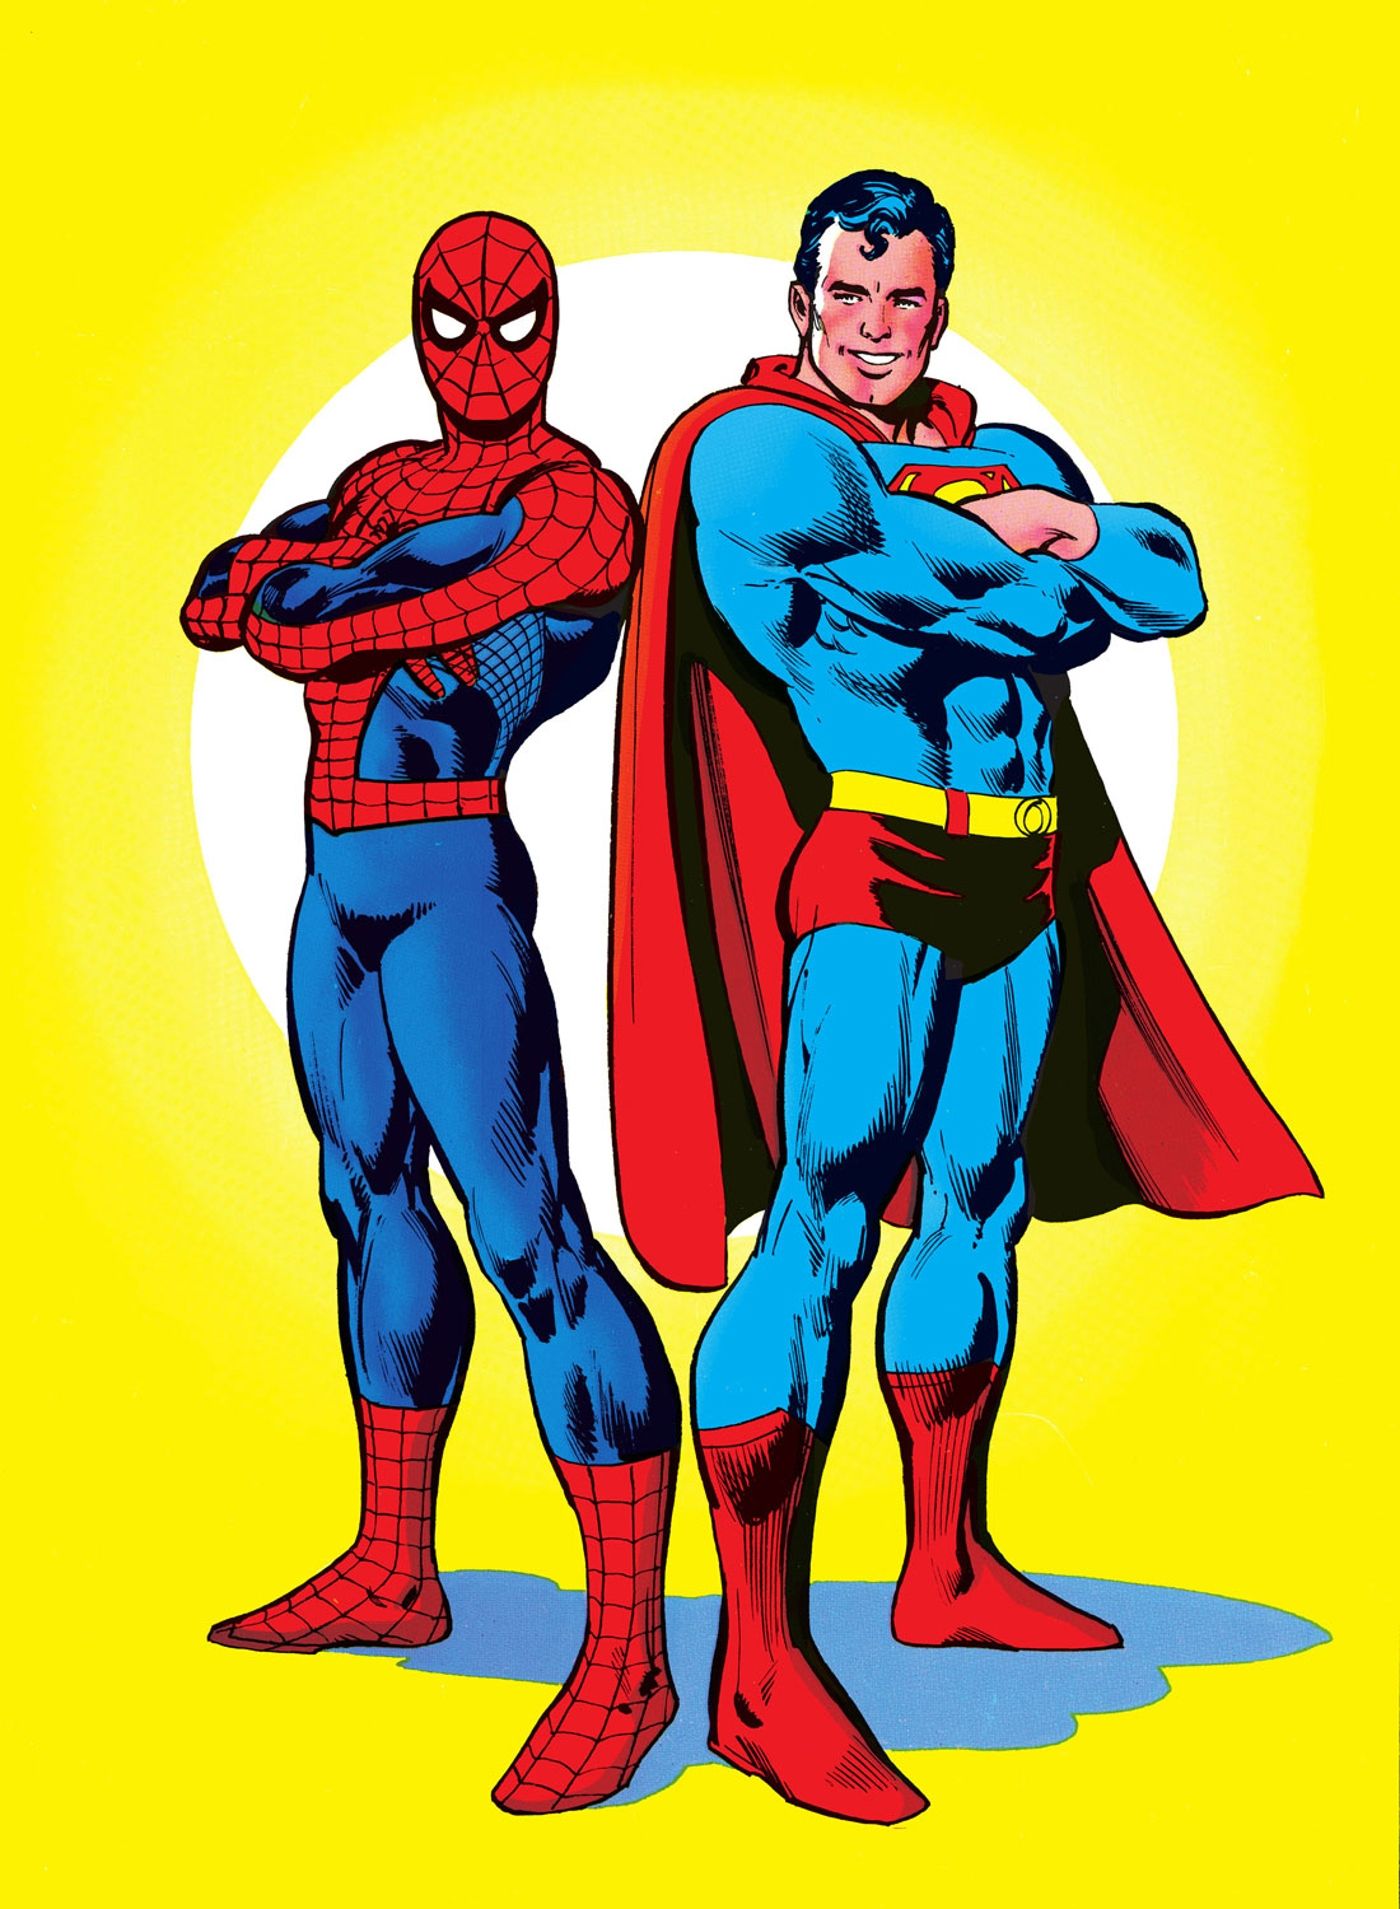 Superman vs Spider-Man, Darkseid vs Galactus, Punisher vs Batman: DC & Marvel Finally Reprint Their Iconic Crossover Comics